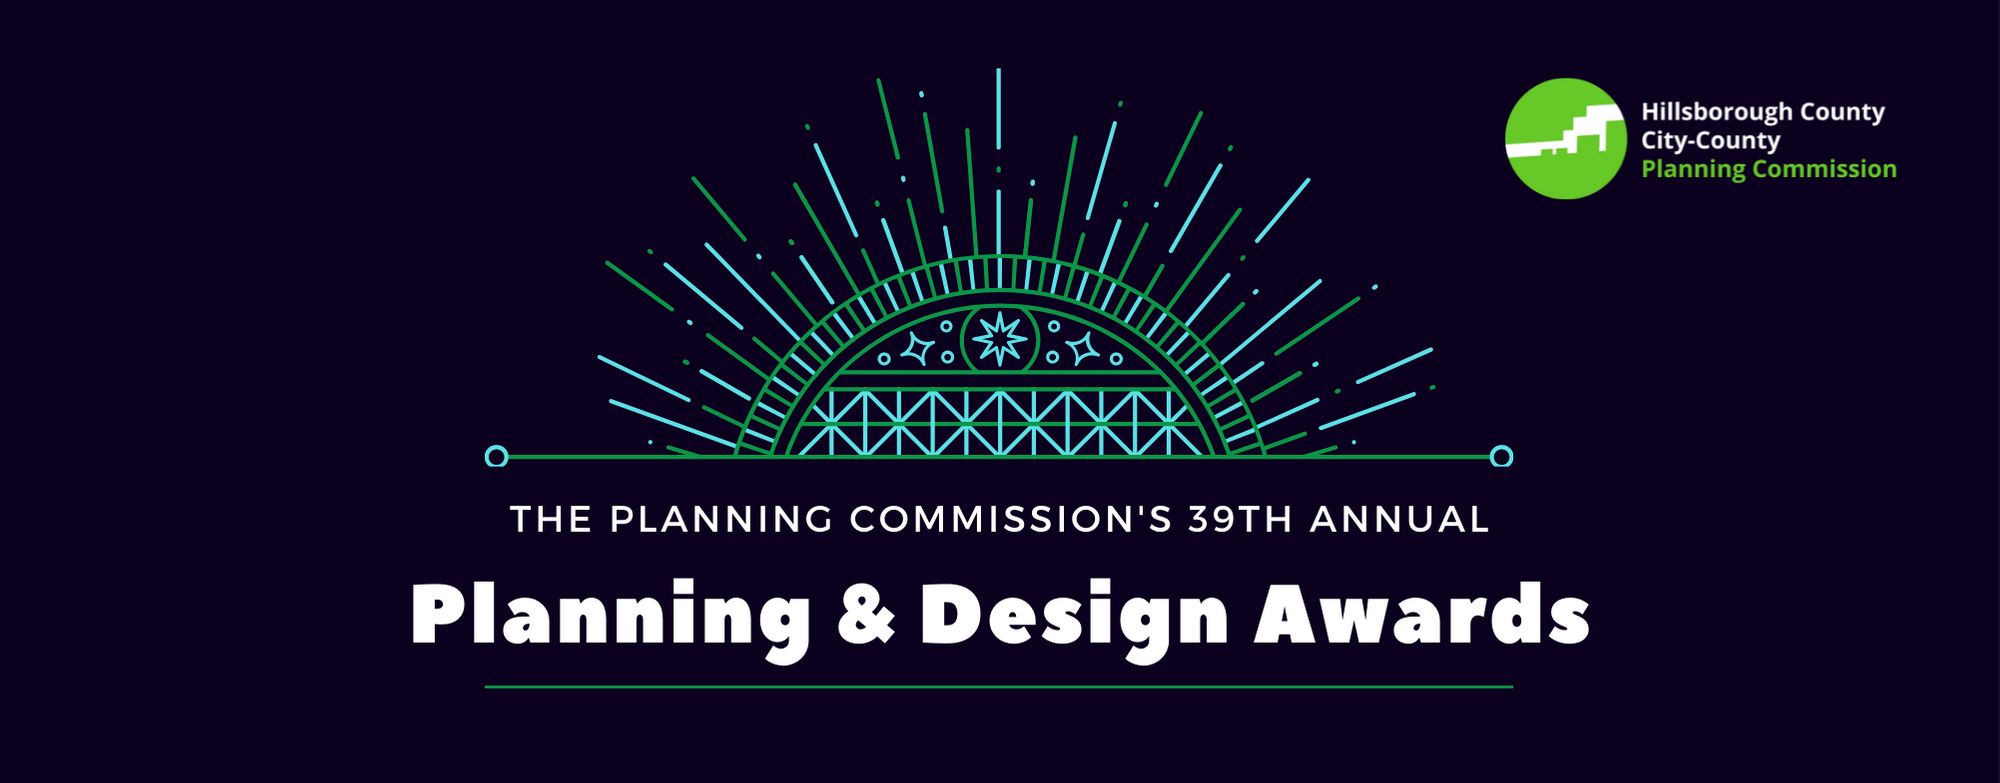 FleischmanGarcia Threefold Winner at the 39th Annual Planning & Design Awards